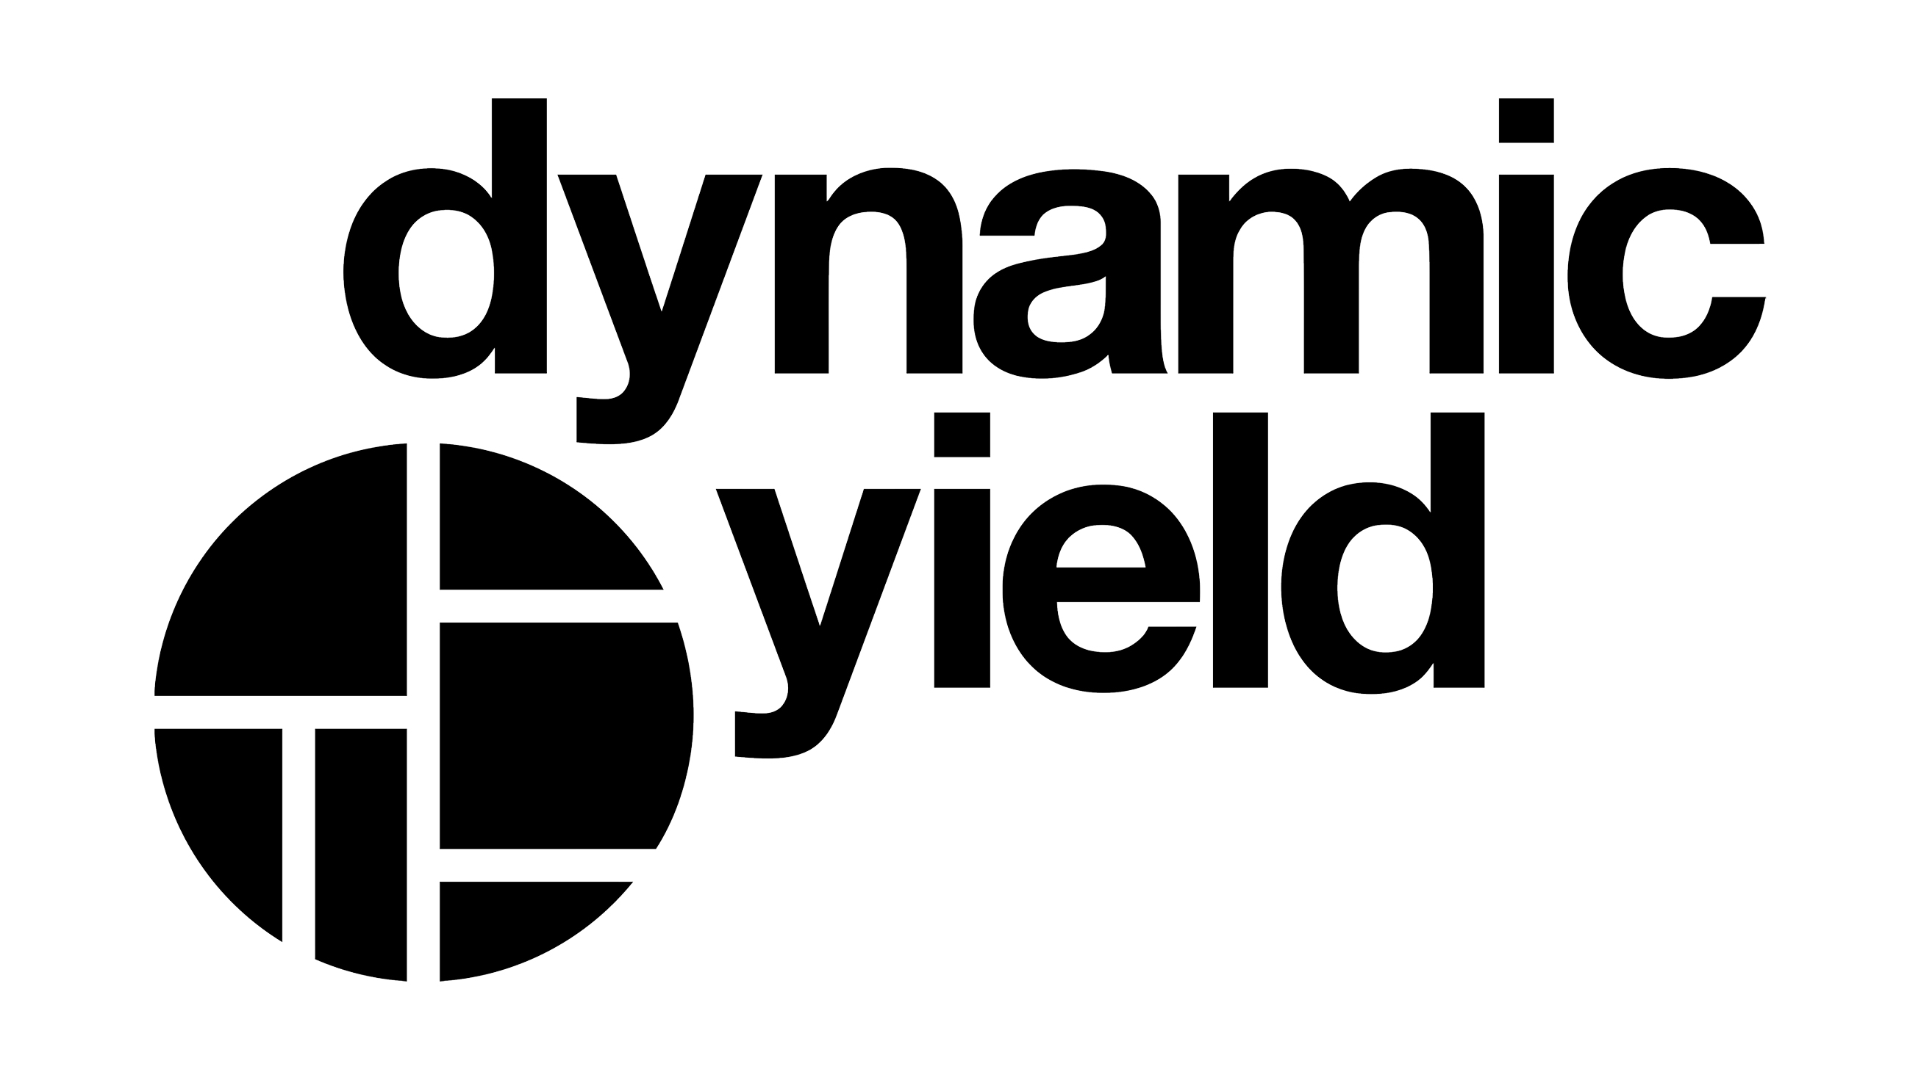 Dynamic Yield